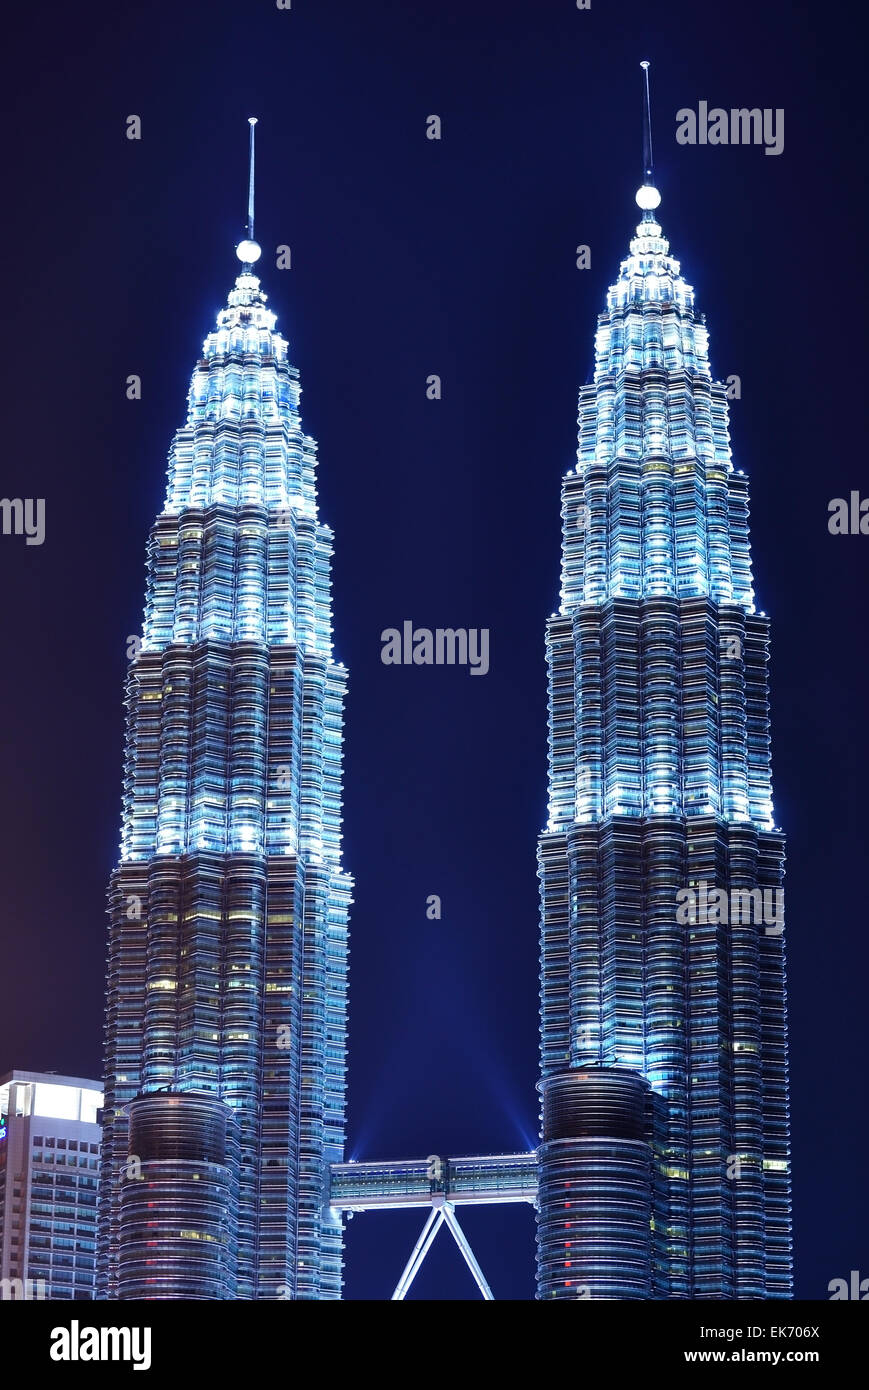 Petronas Twin Towers bei Nacht. Petronas Twin Tower ist ein bekanntes Wahrzeichen in Kuala Lumpur, Malaysia. Stockfoto